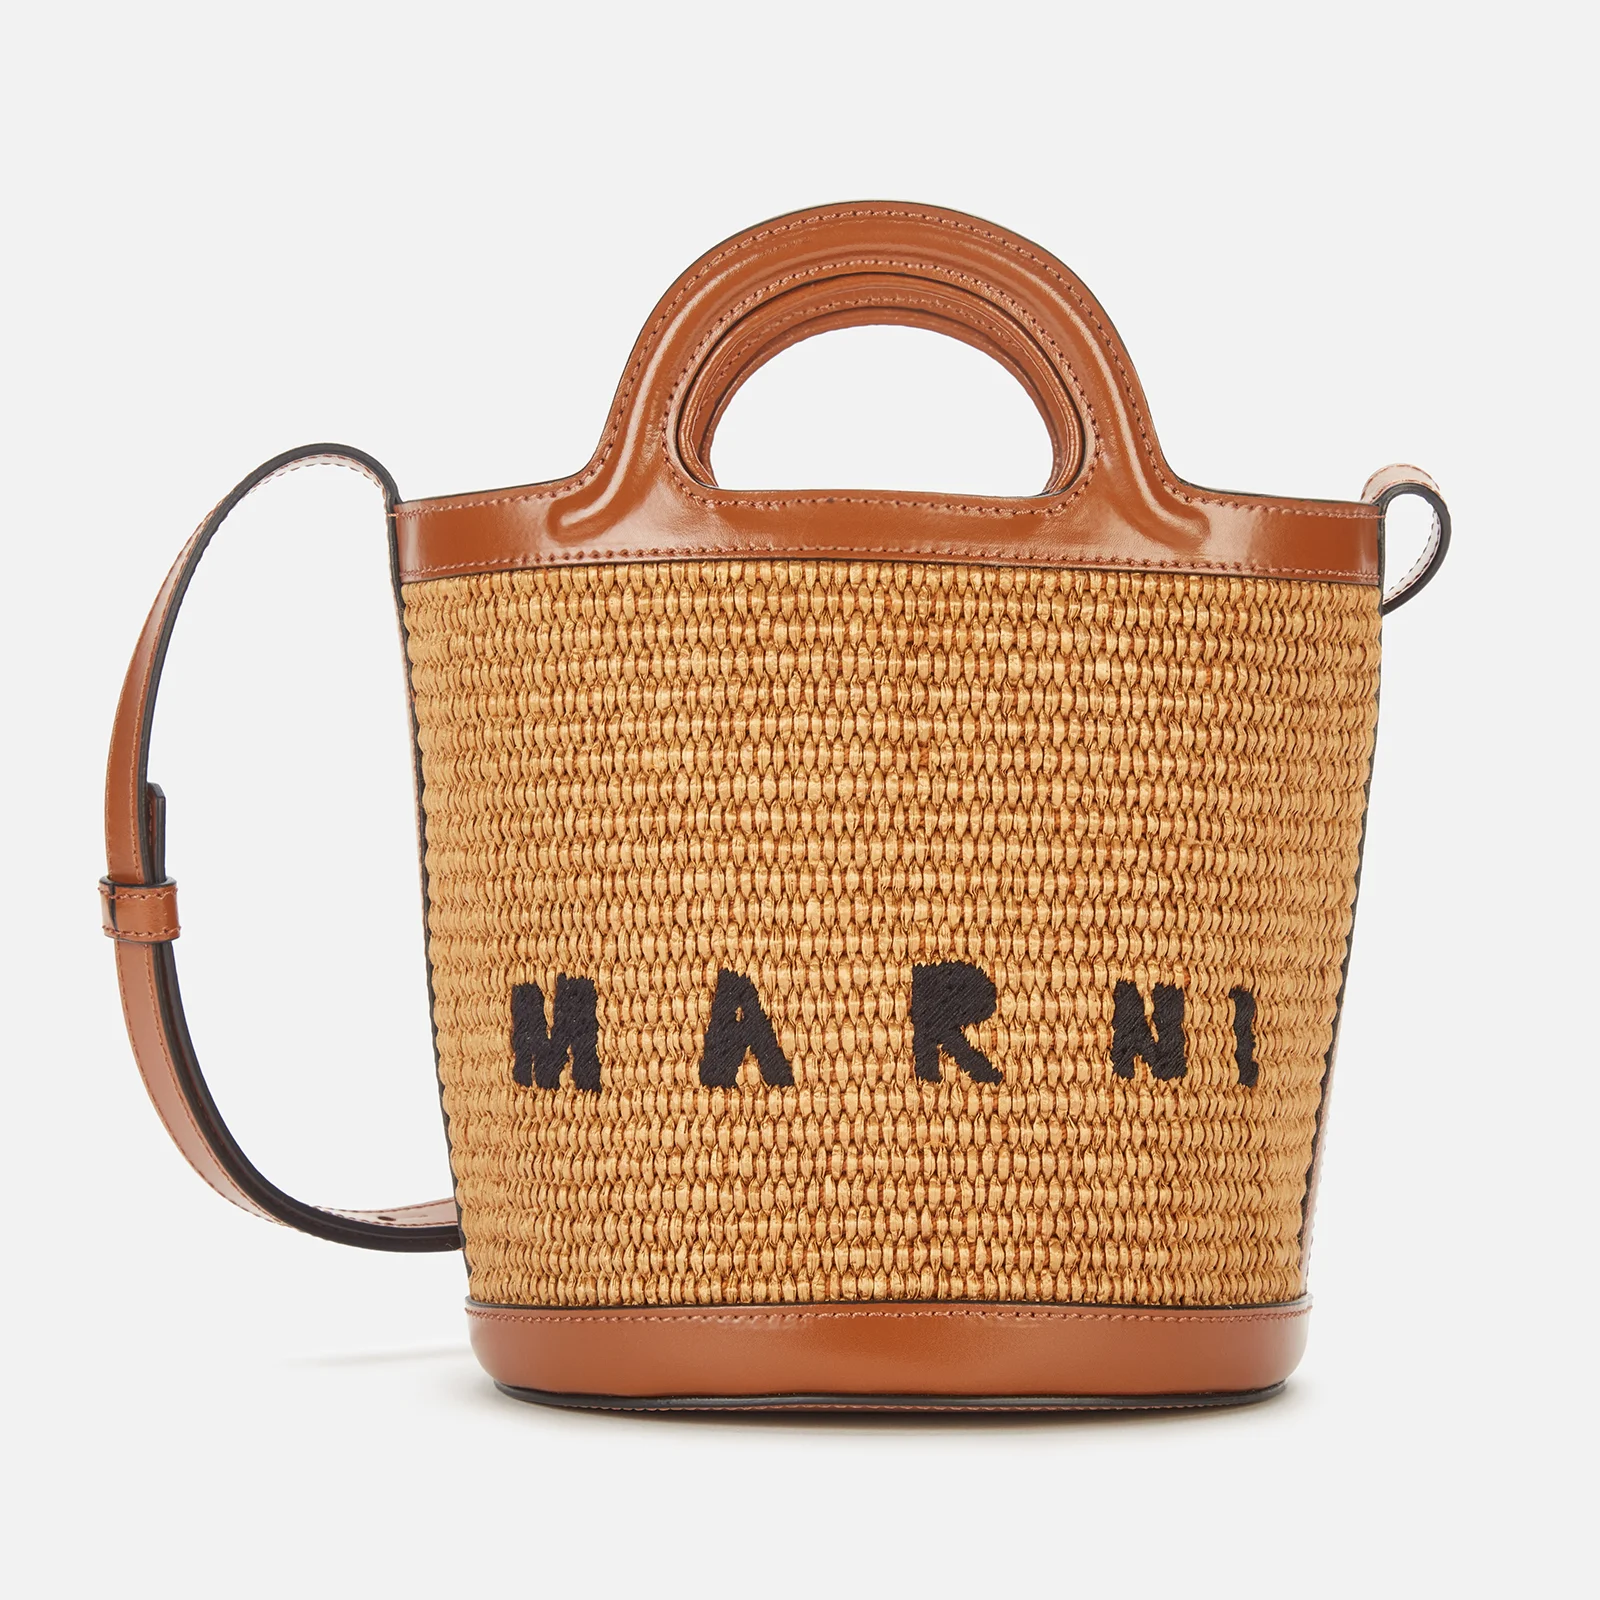 Marni Women's Mini Bucket Bag - Raw Sienna Image 1